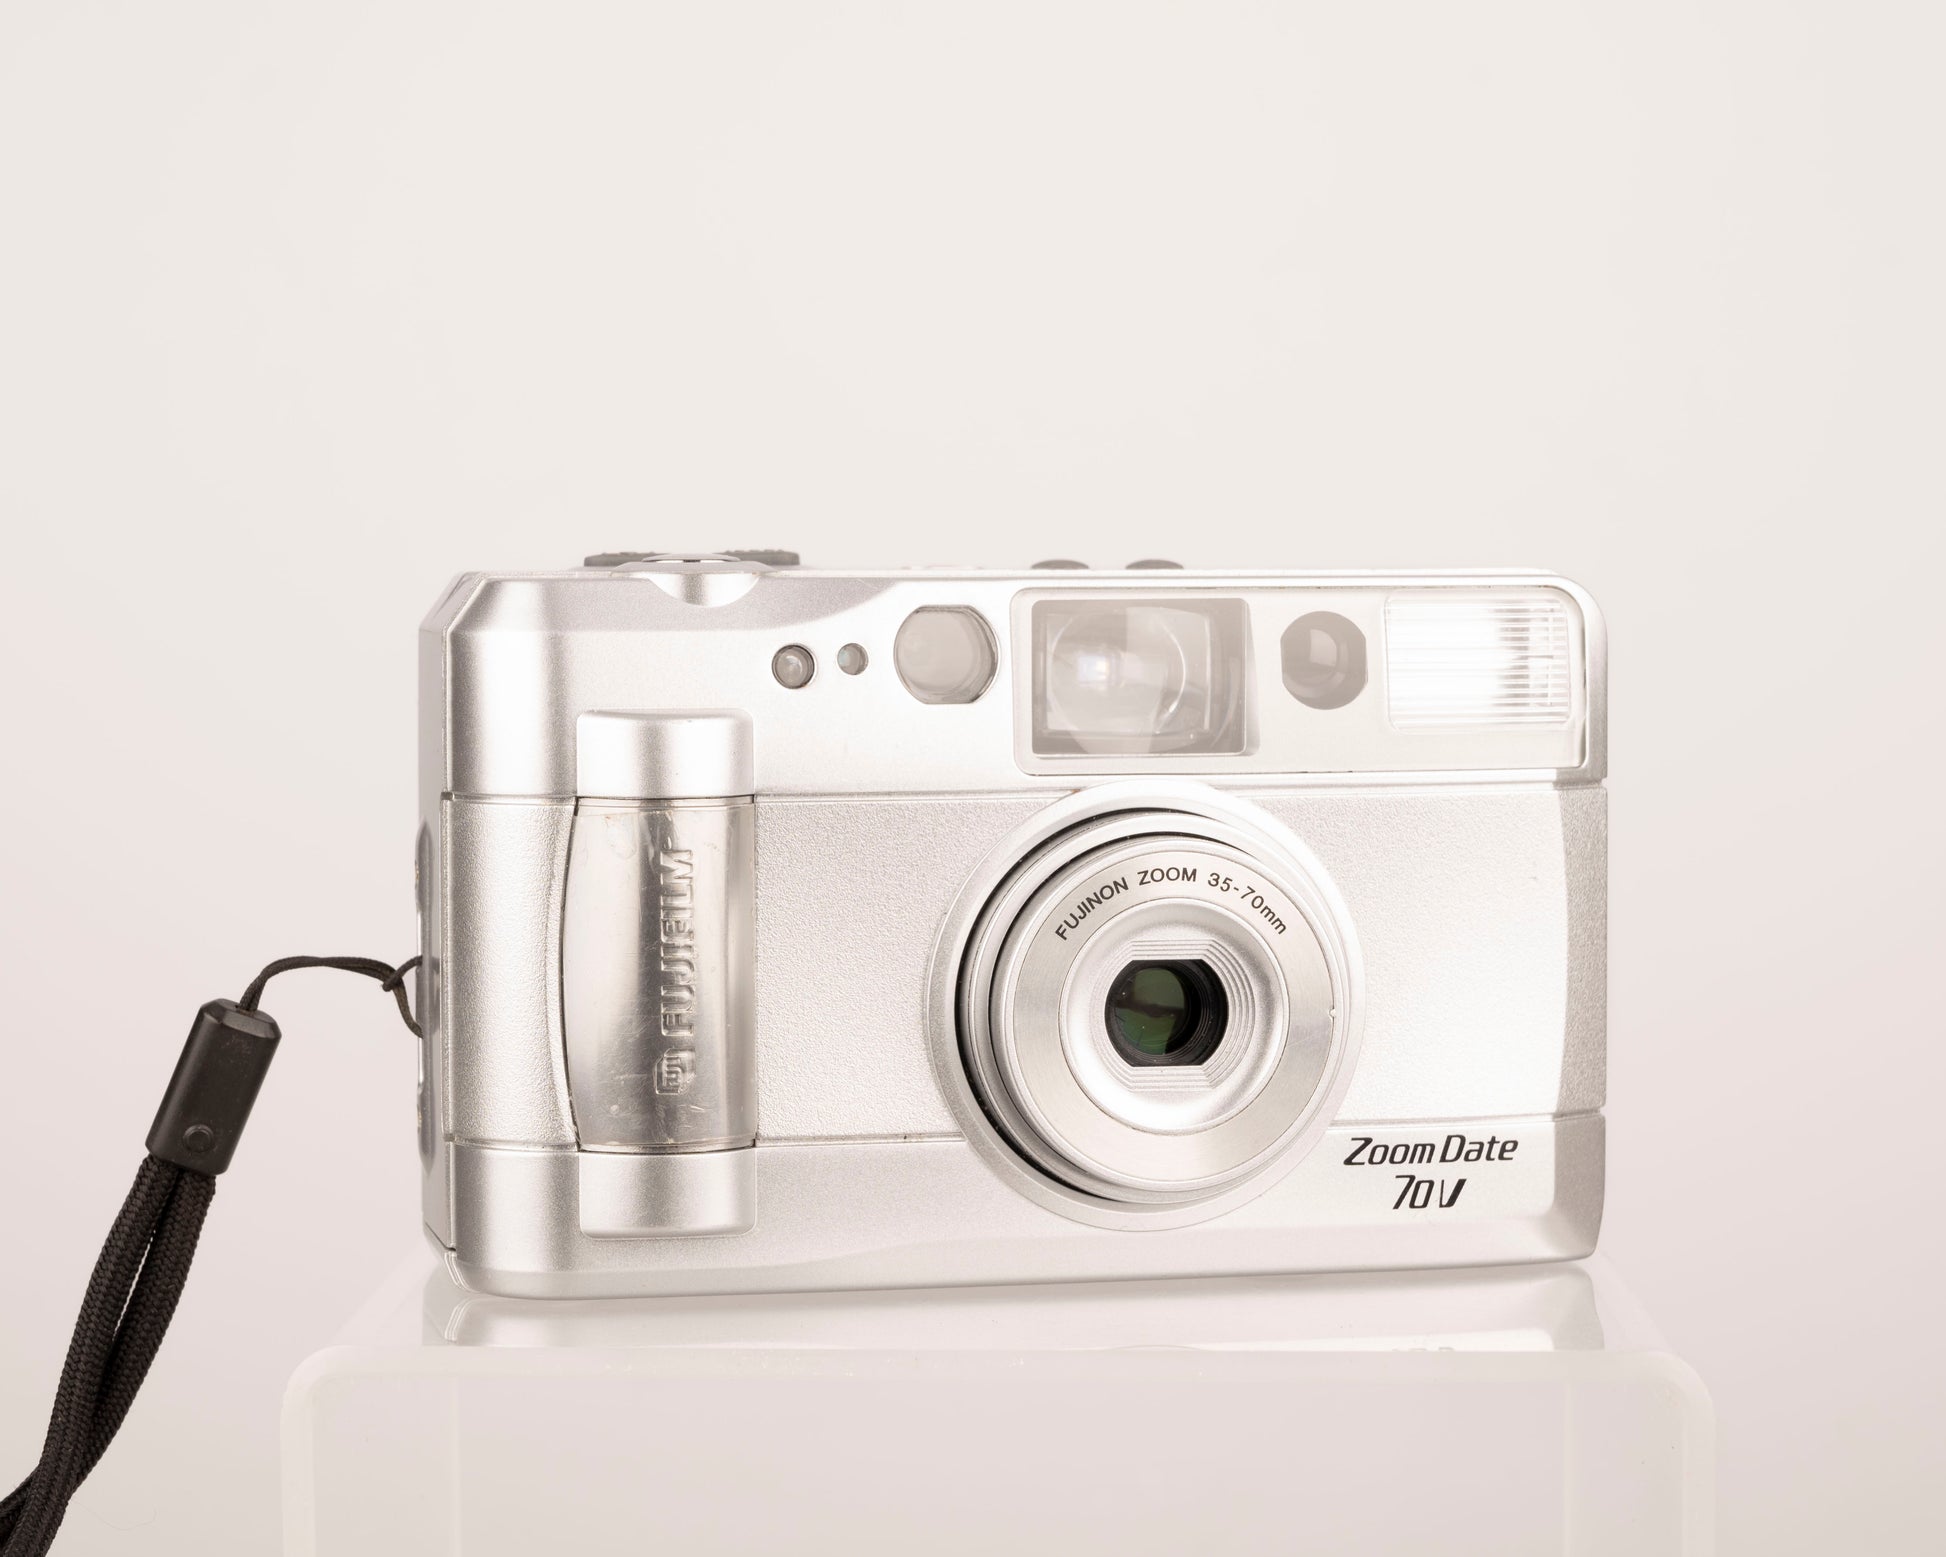 The Fujifilm Zoom Date 70V compact 35mm camera